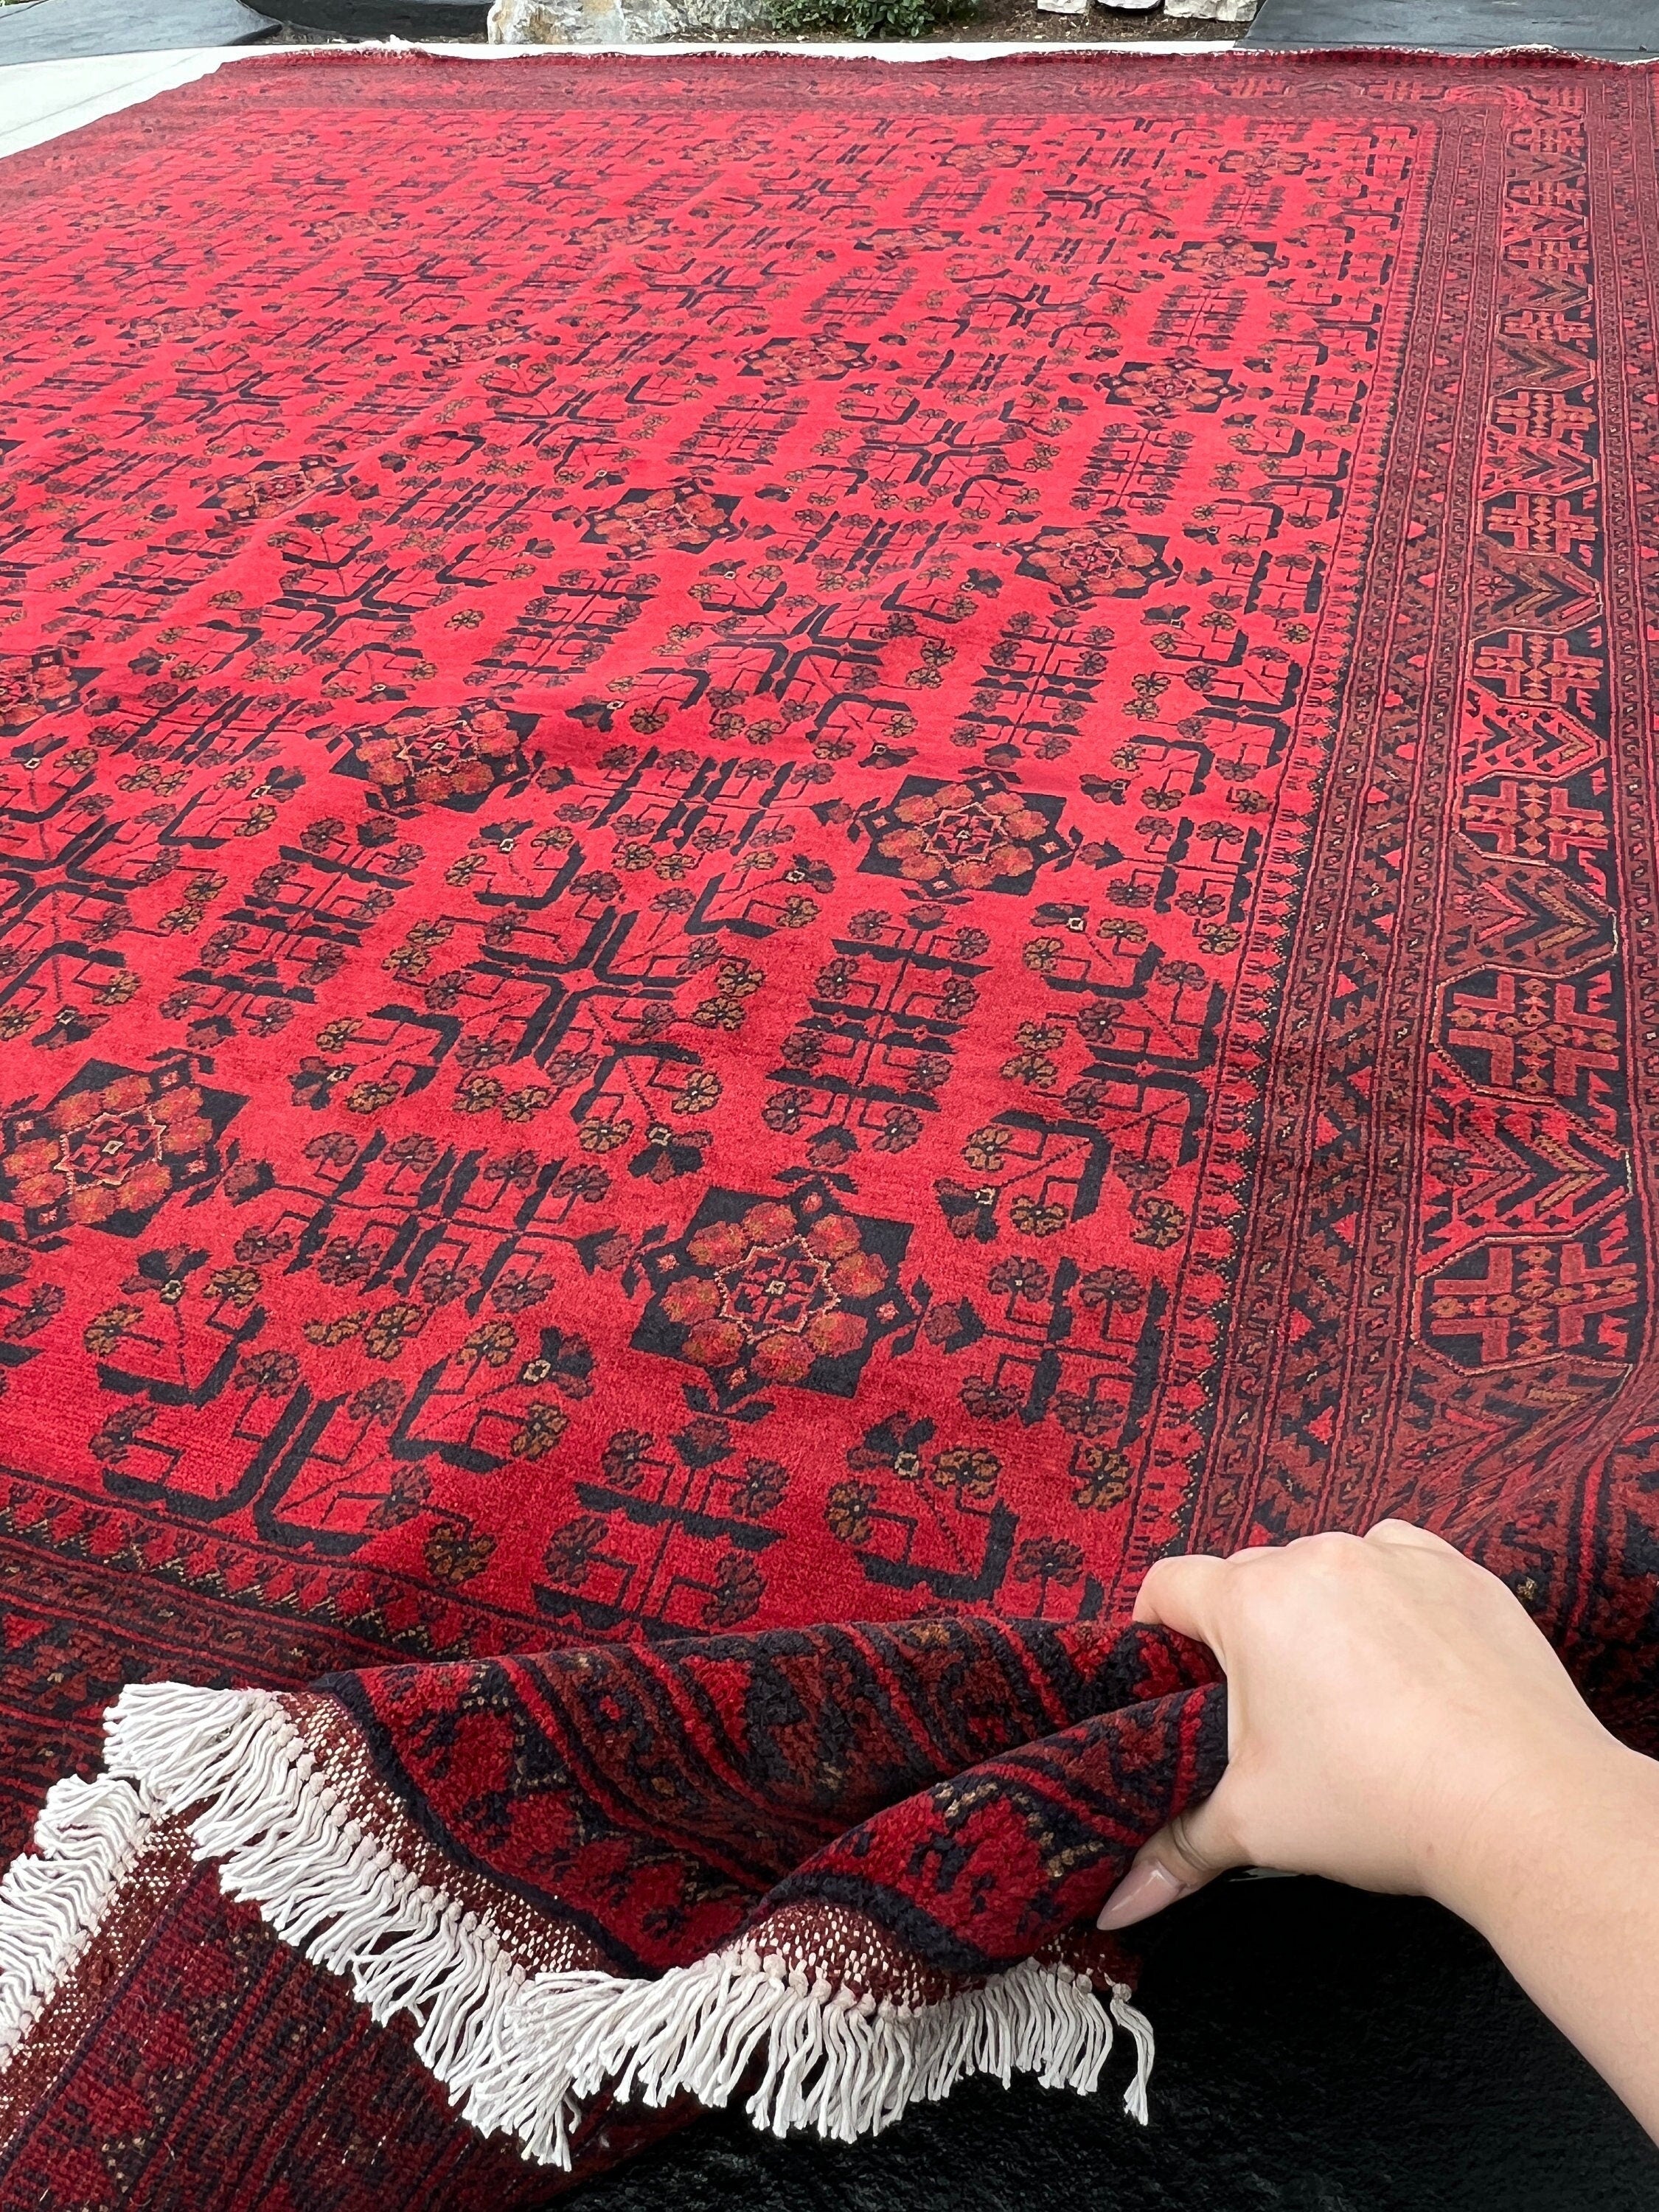 10x13 (305x365) Handmade Afghan Rug | Cherry Red Brick Red Black Burnt Orange Brown White | Heriz Turkish Hand Knotted Oushak Oriental Wool